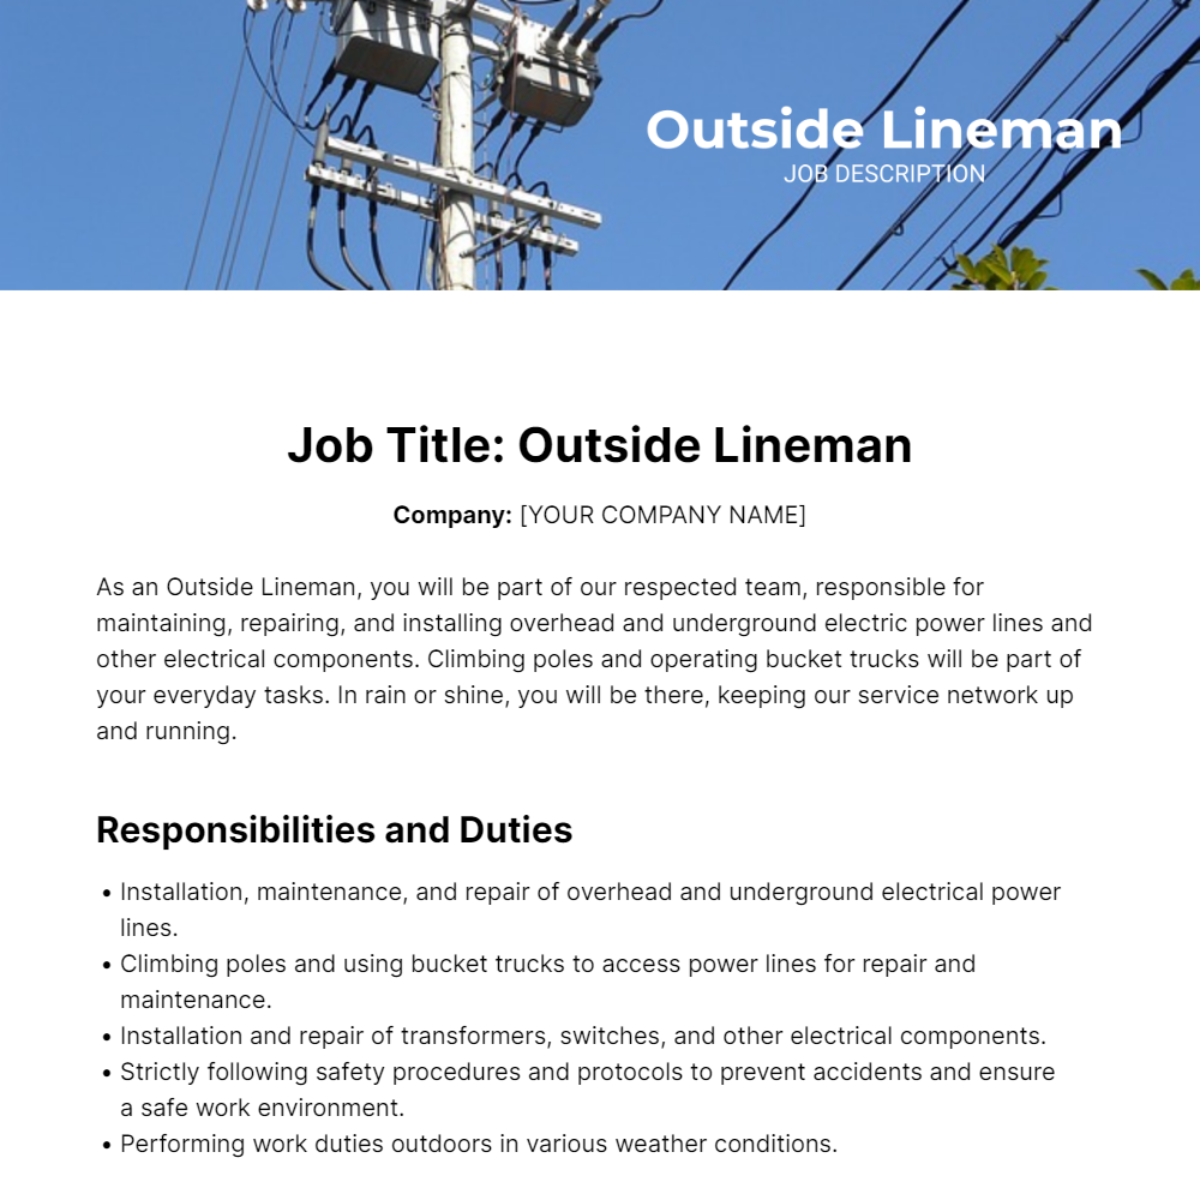 Outside Lineman Job Description Template